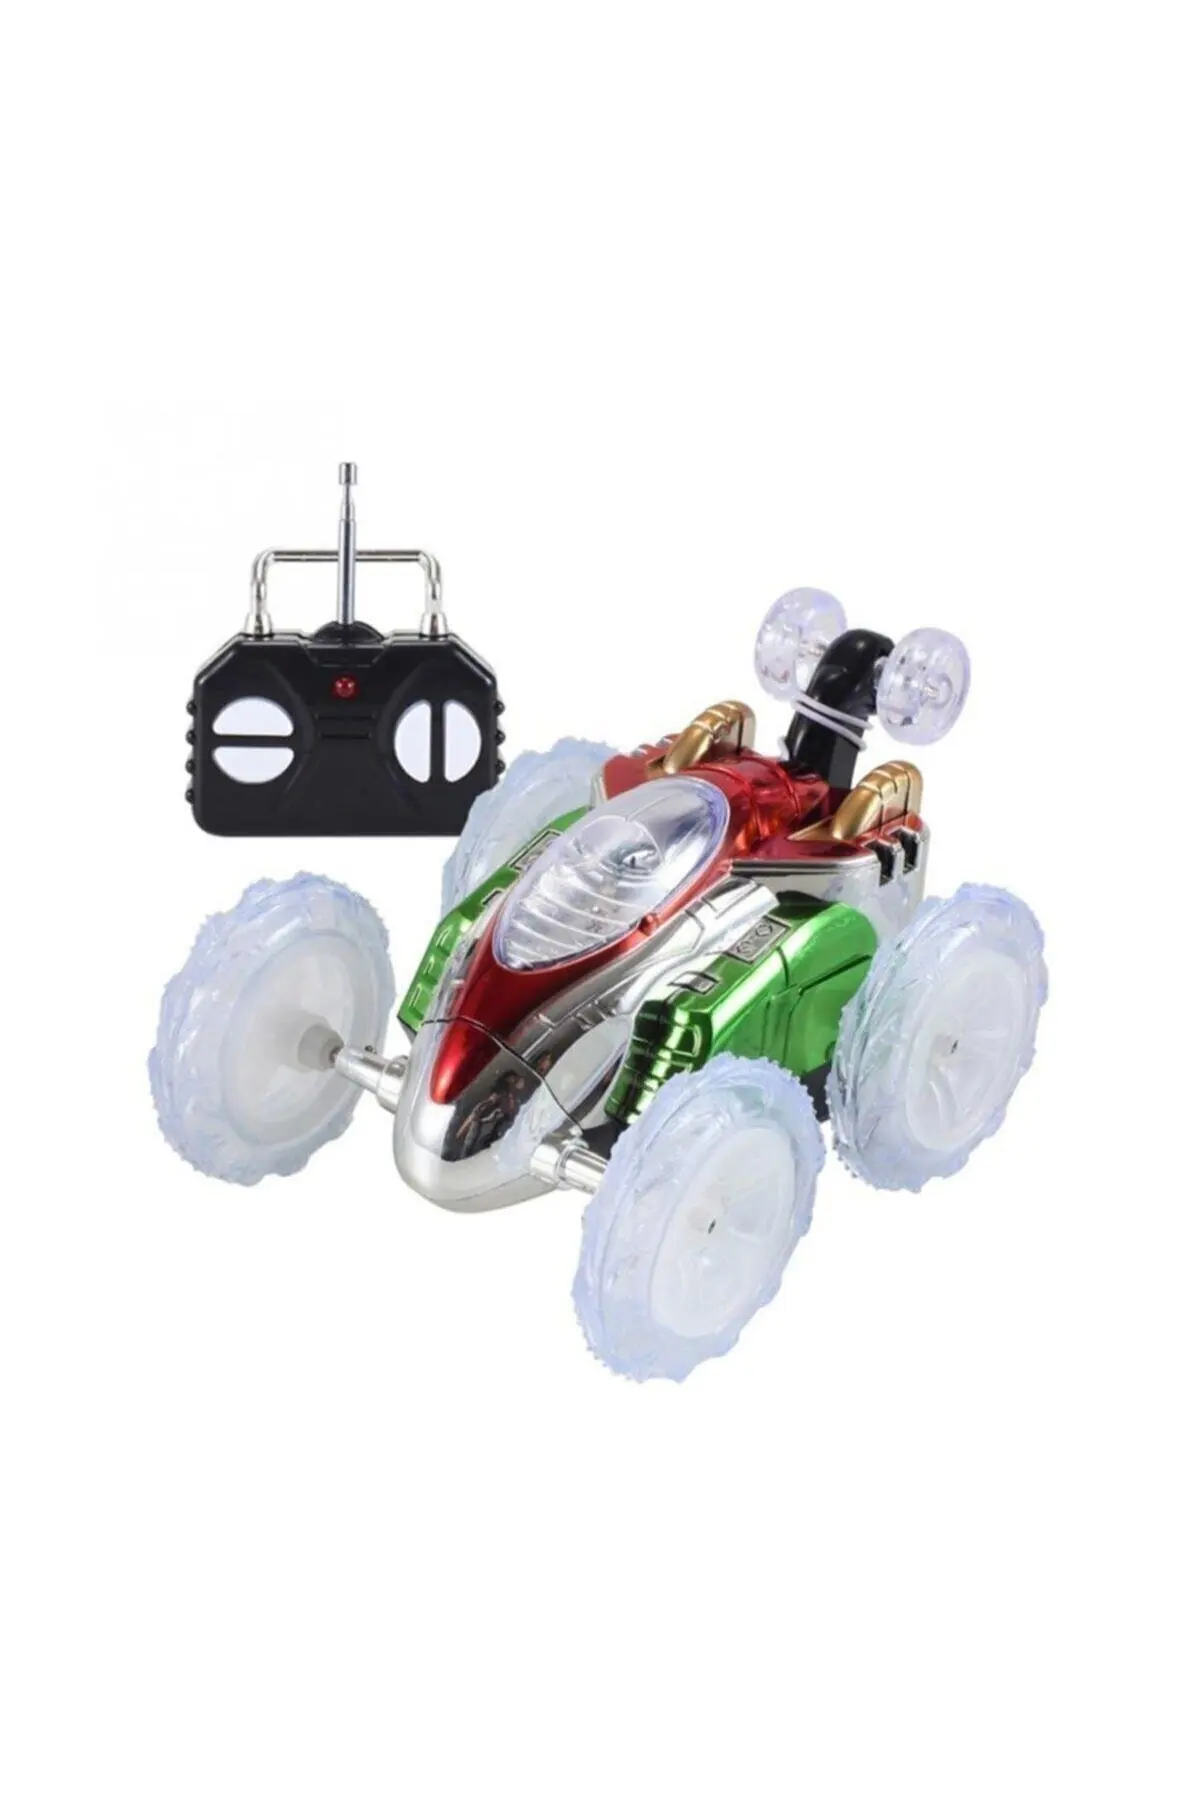 

Remote Controlled Tumble Scorer Illuminated Acrobat Toy Car Green Color Children Fun Toys